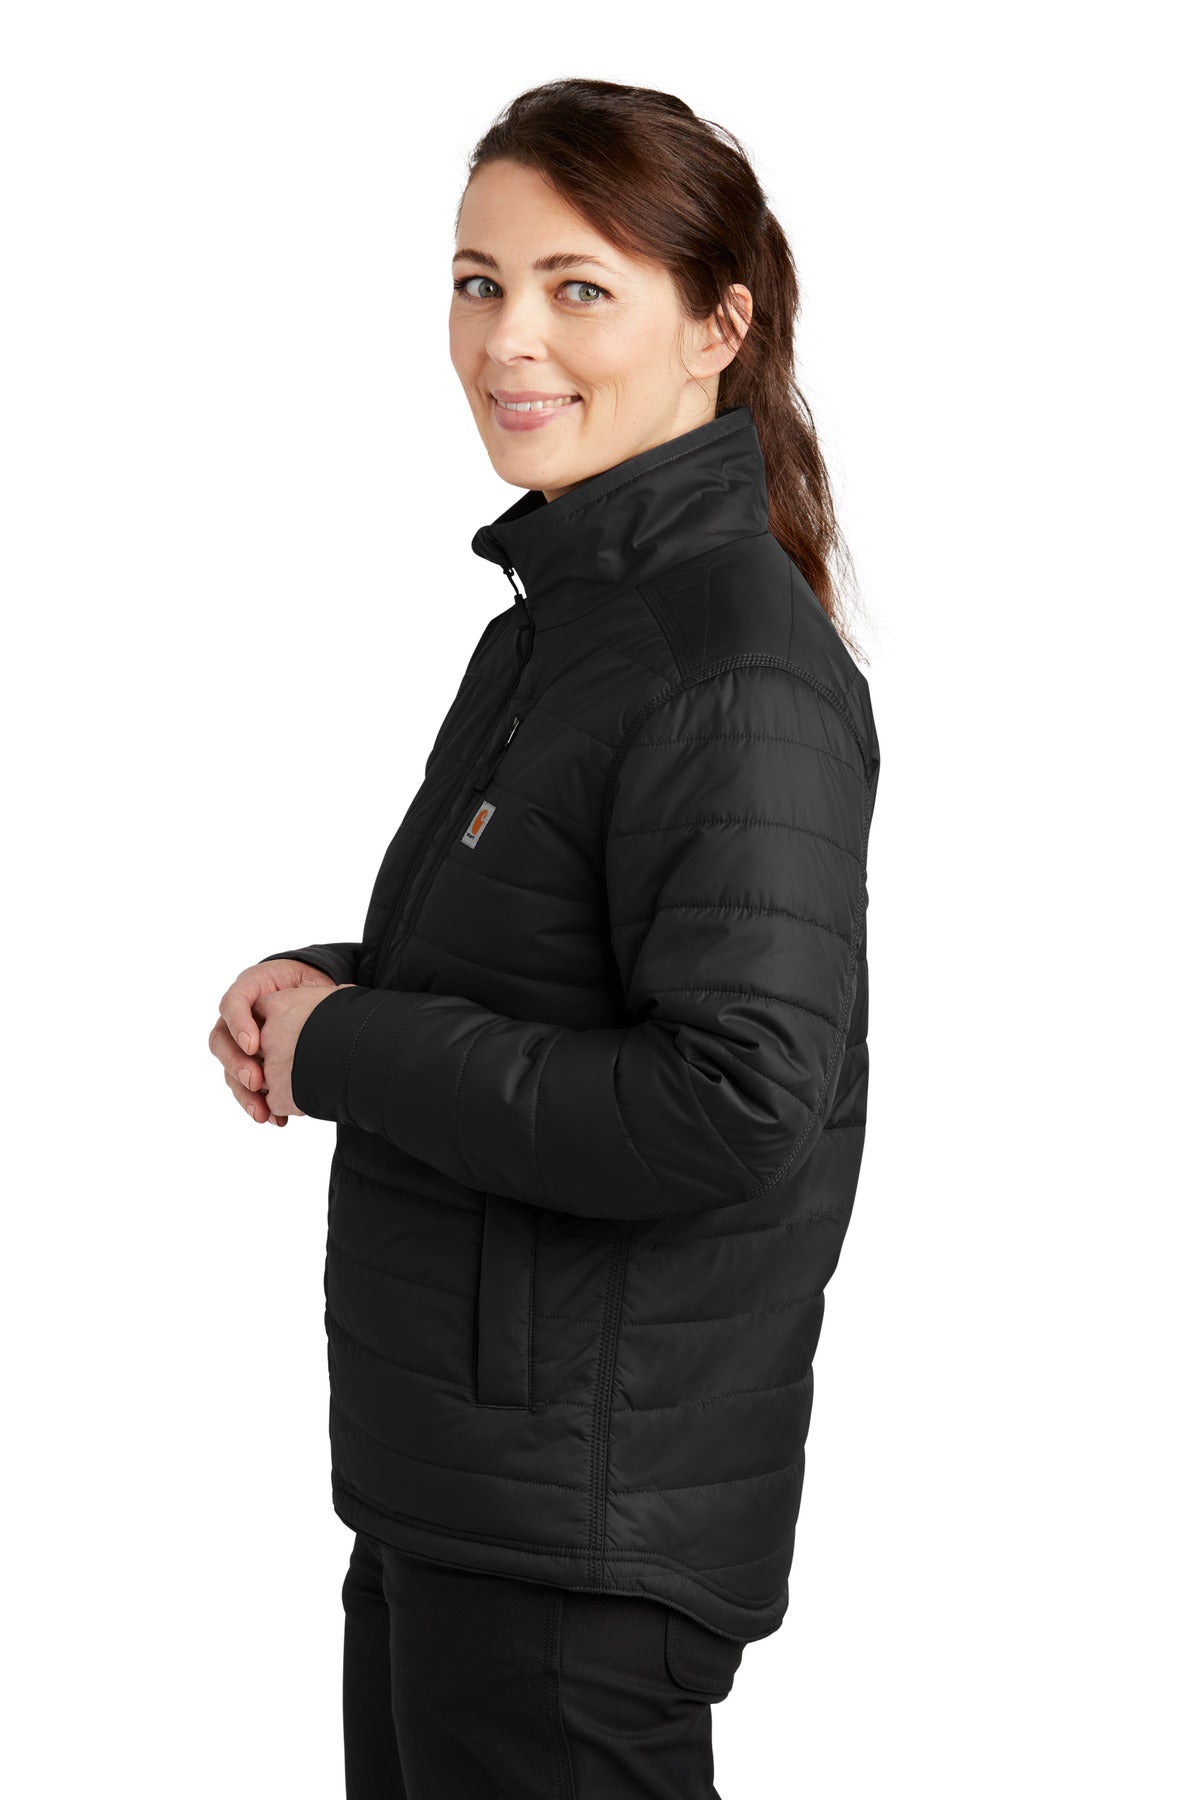 Carhartt® Women's Gilliam Jacket CT104314 - DFW Impression